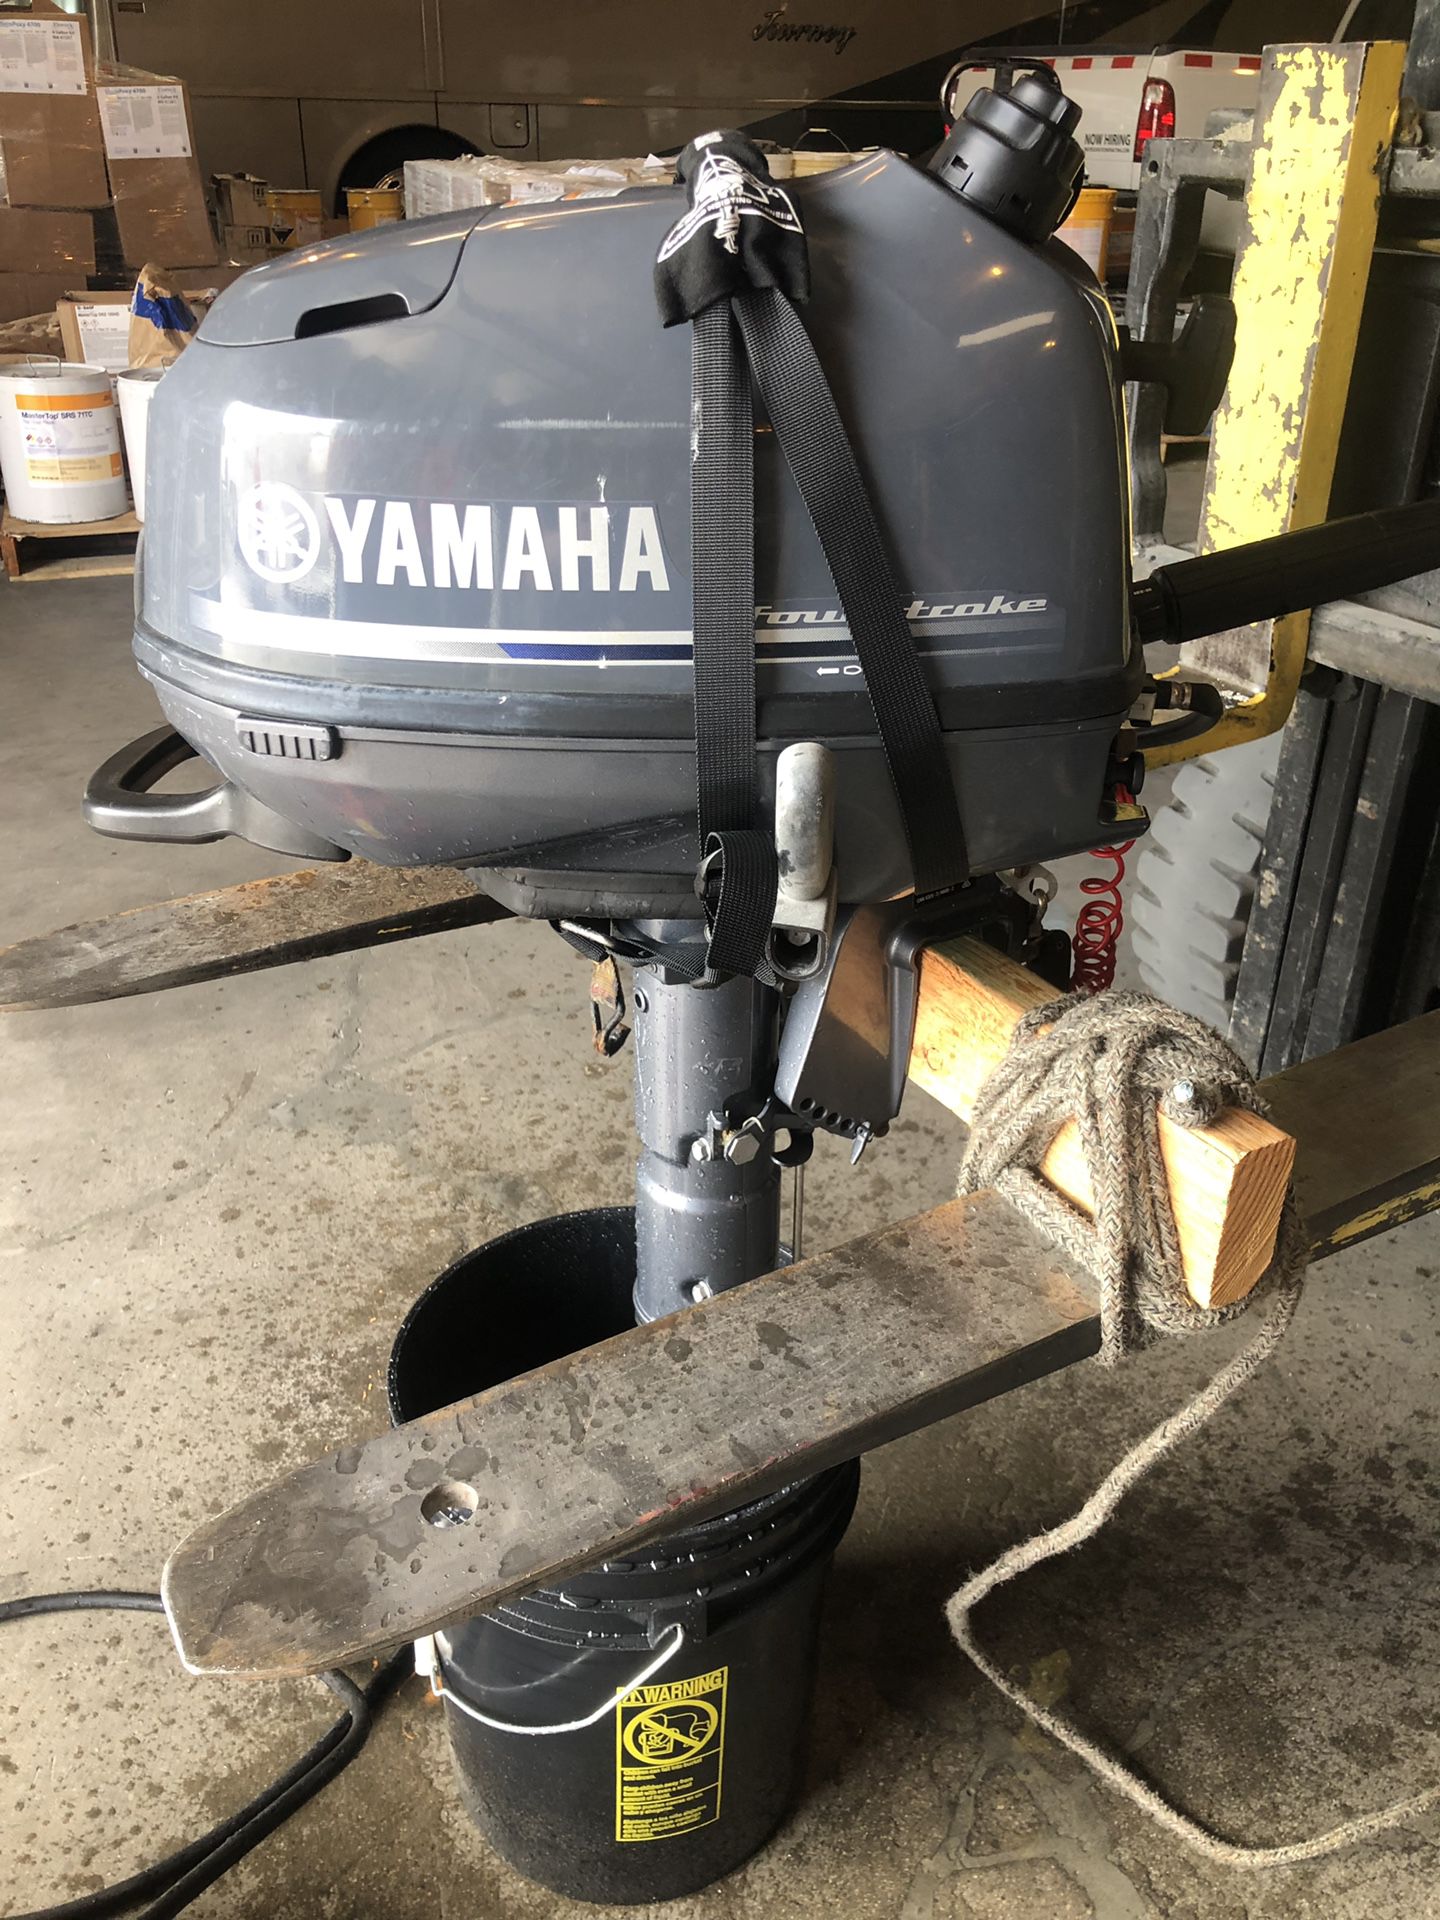 Yamaha 6hp outboard motor 2019